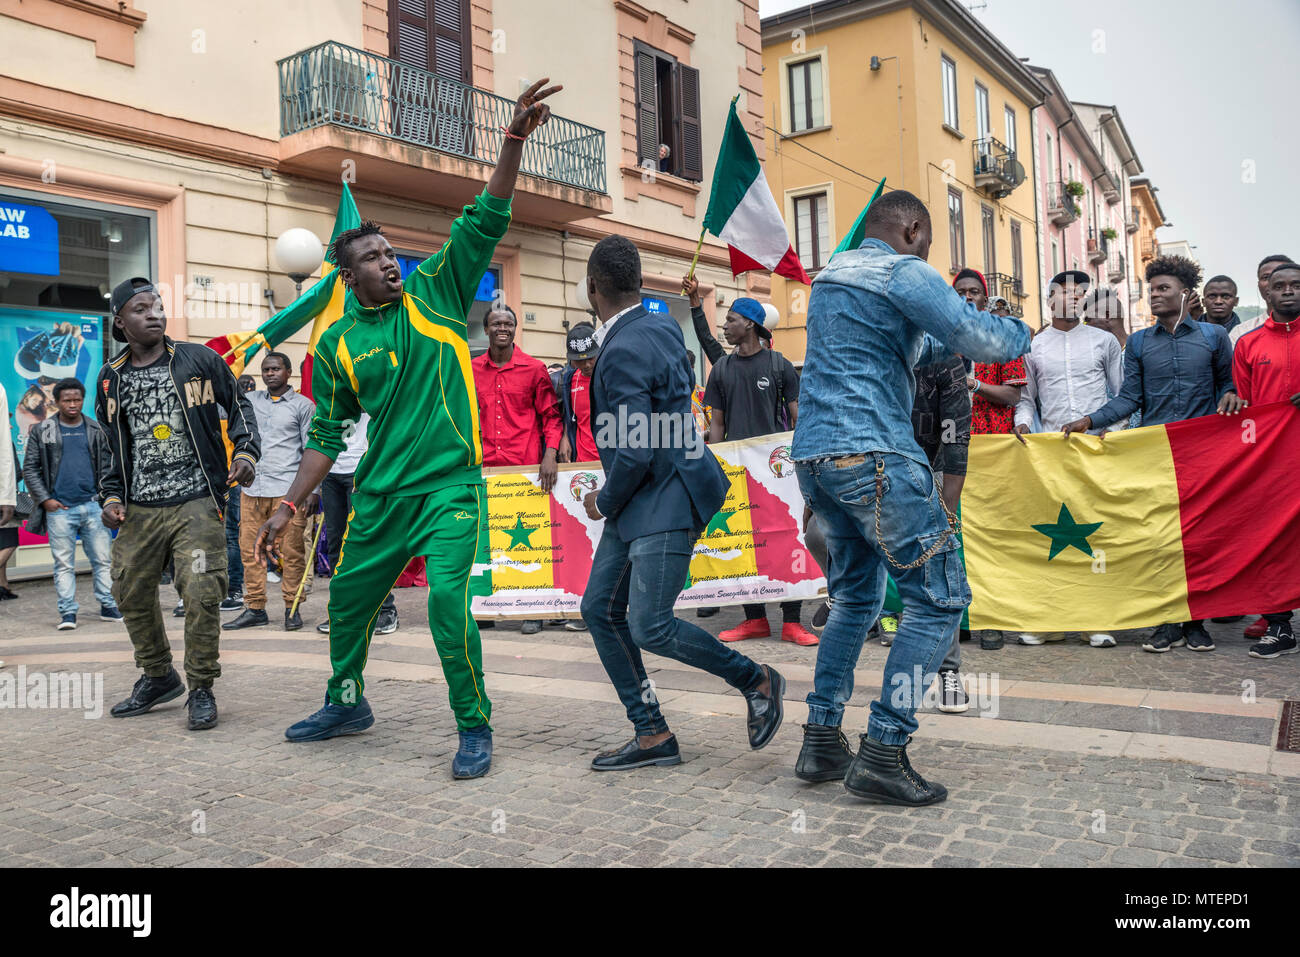 Gruppe der afrikanischen Einwanderer aus Senegal, am 15. April 2018, Corso Mazzini in Sibari, Kalabrien, Italien Stockfoto